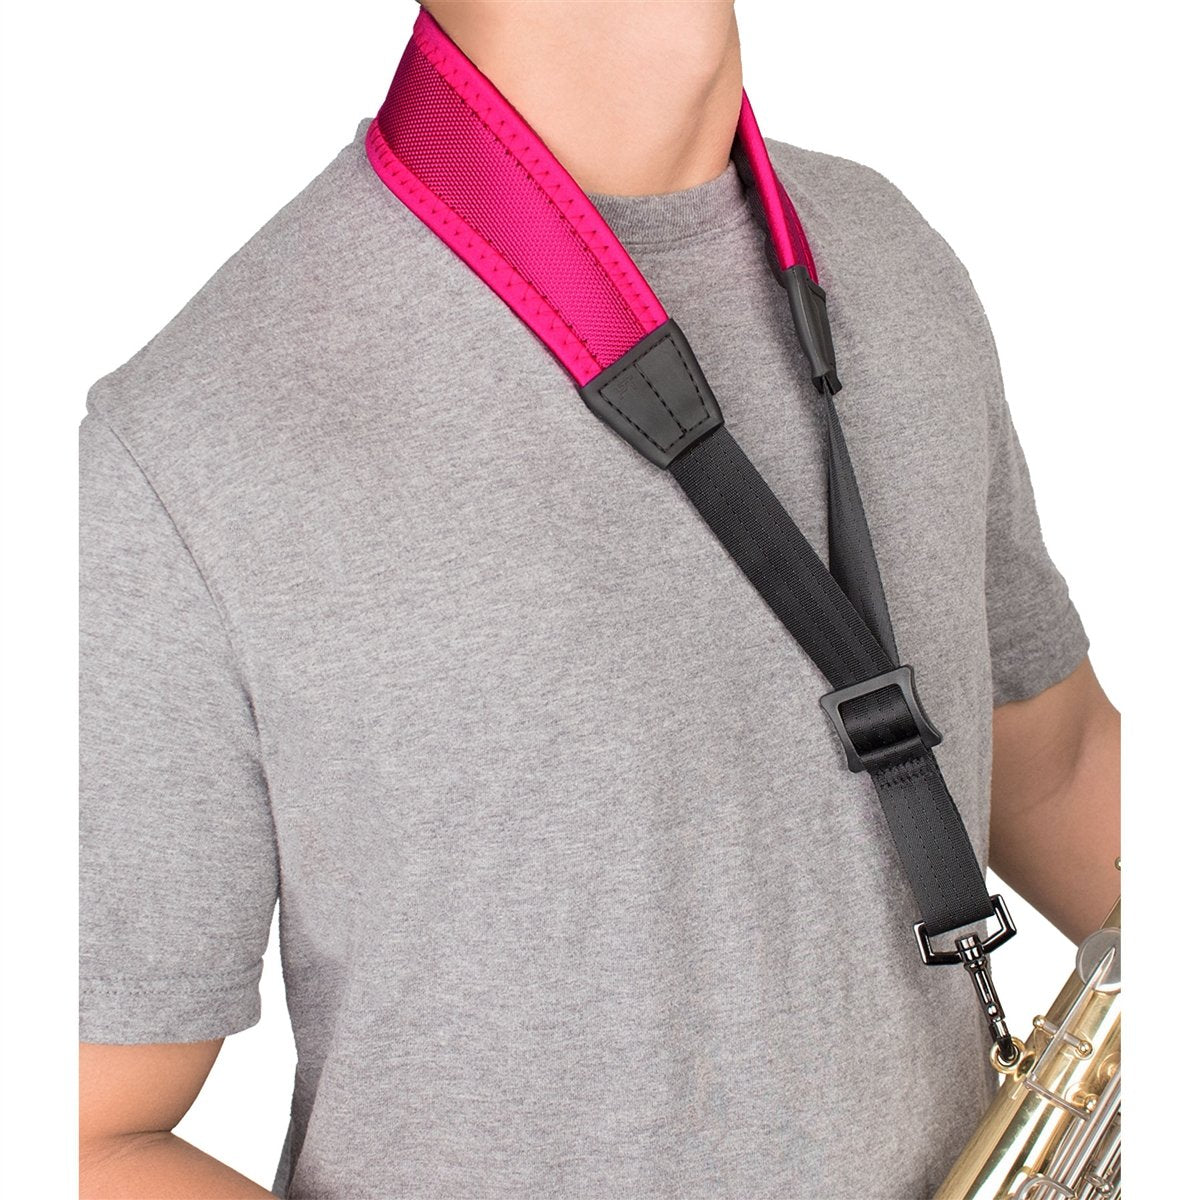 Protec - 22â€³ (Regular) Ballistic Neoprene Less-Stress Saxophone Neck Strap-Accessories-Protec-Hot Pink-Music Elements